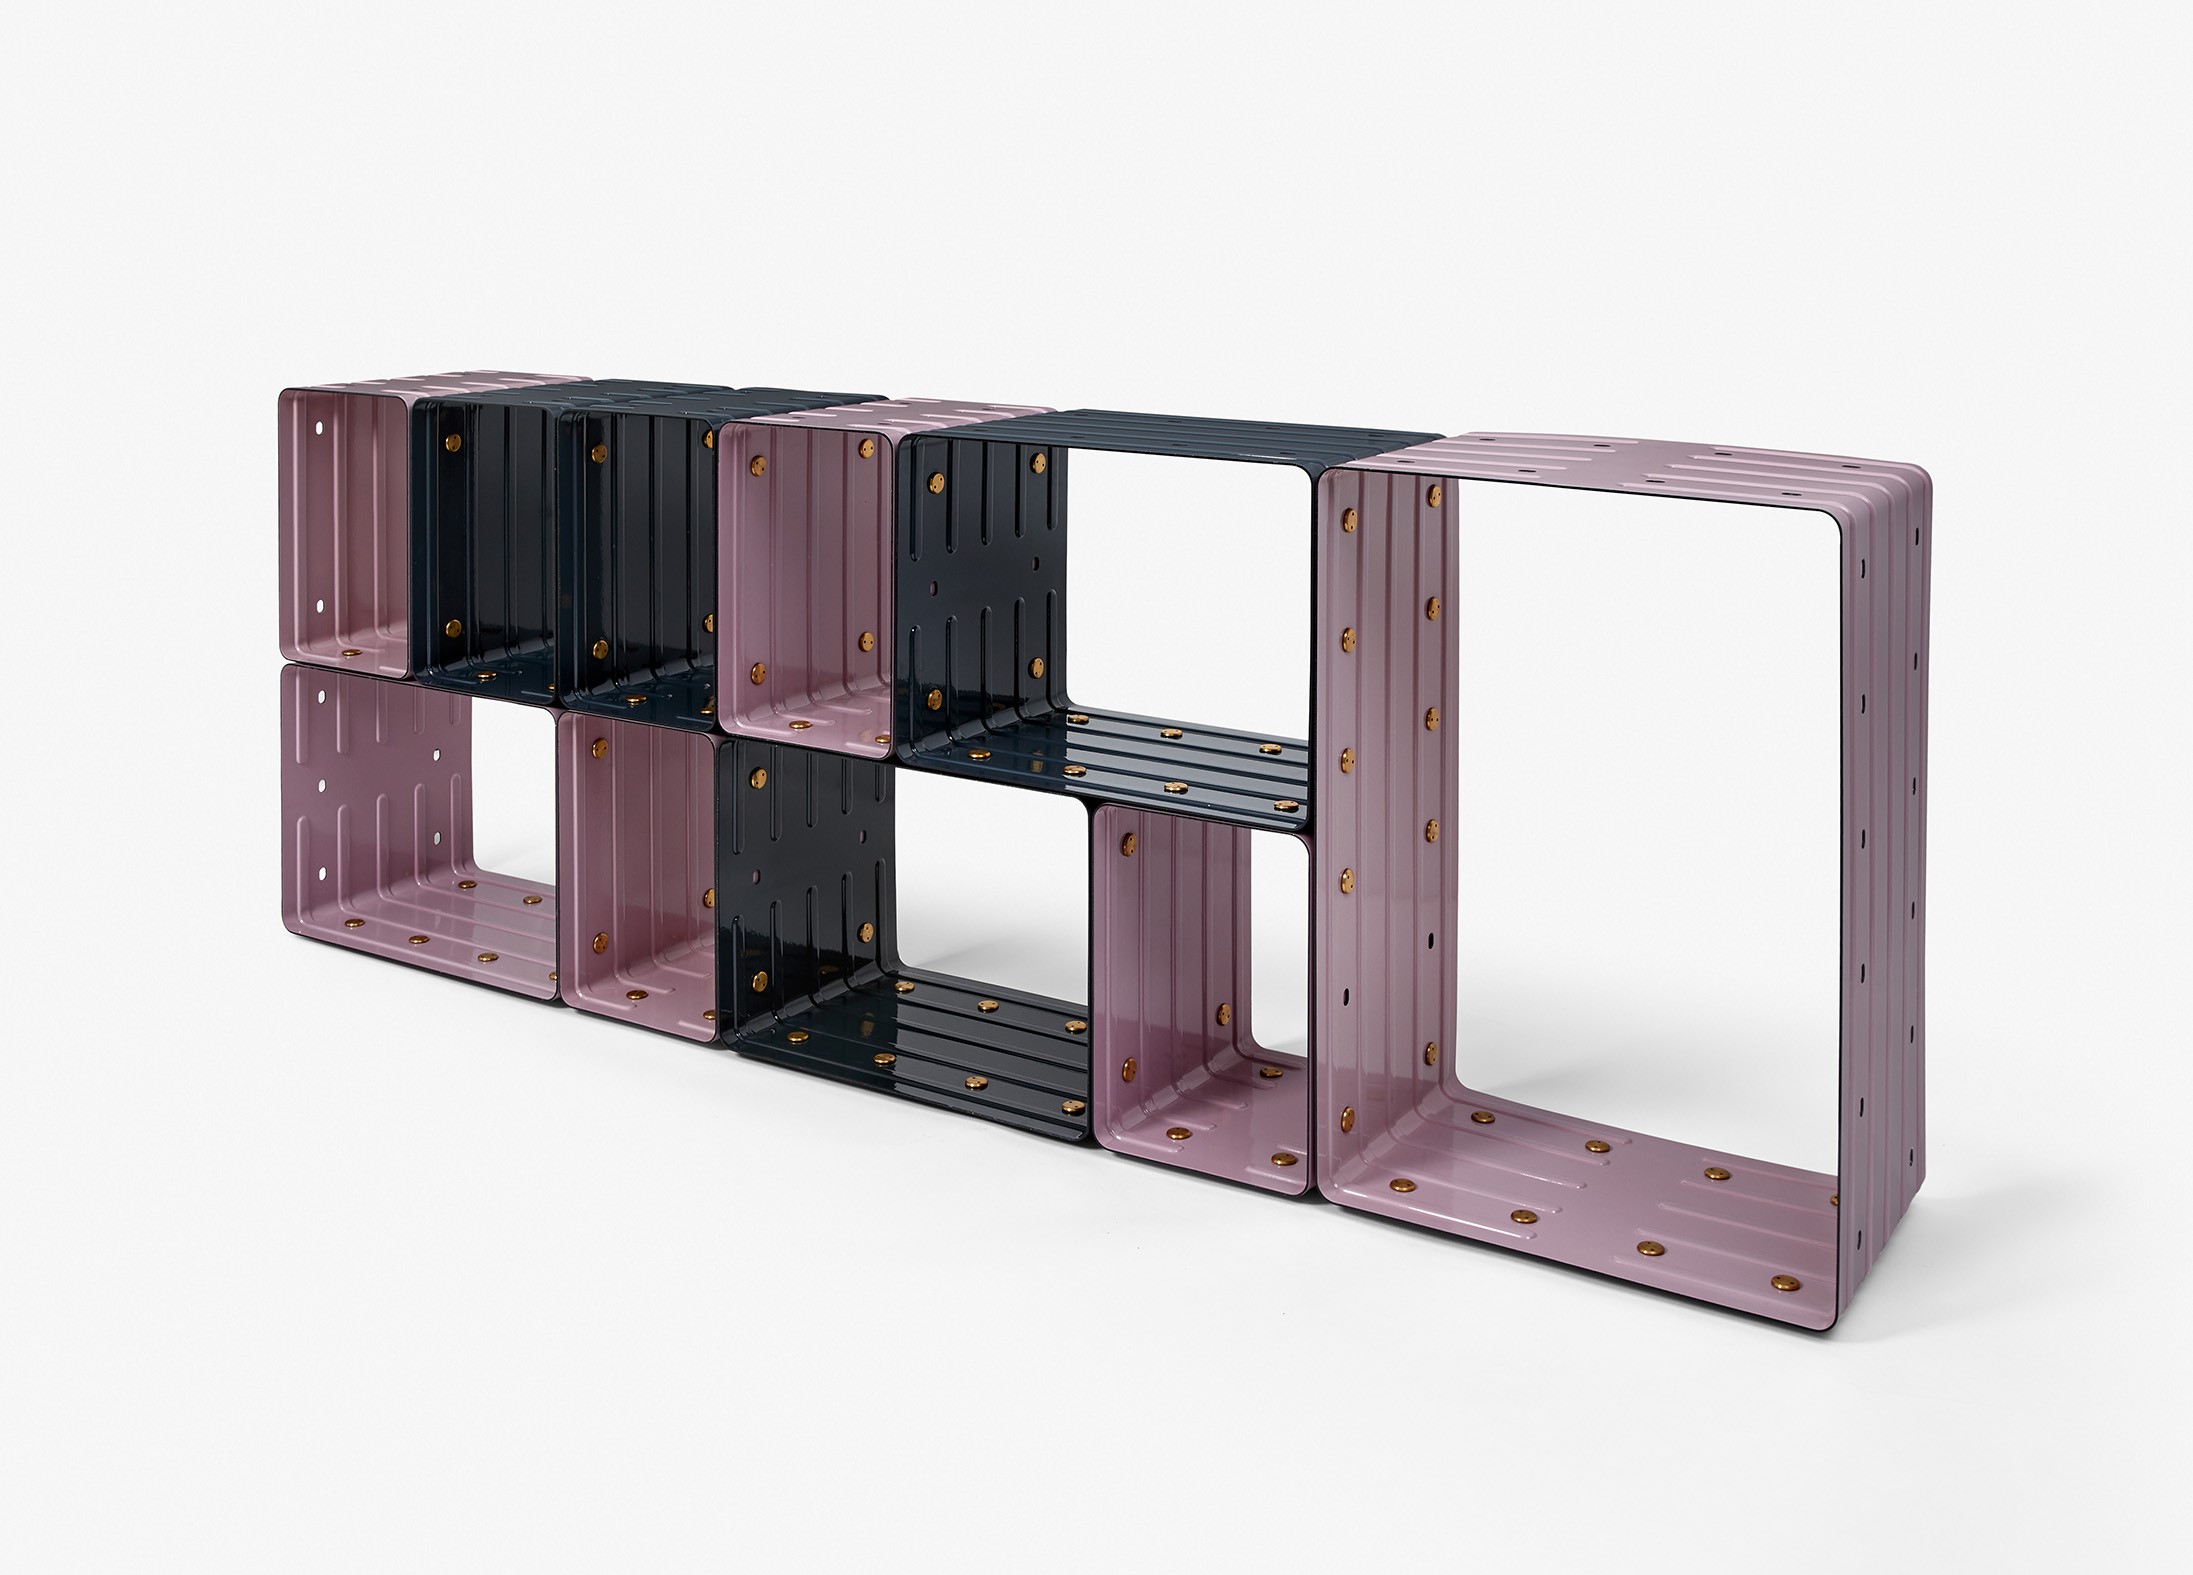 Quobus 1,3,6 two-colored - Marc Newson - Bookshelf - Galerie kreo